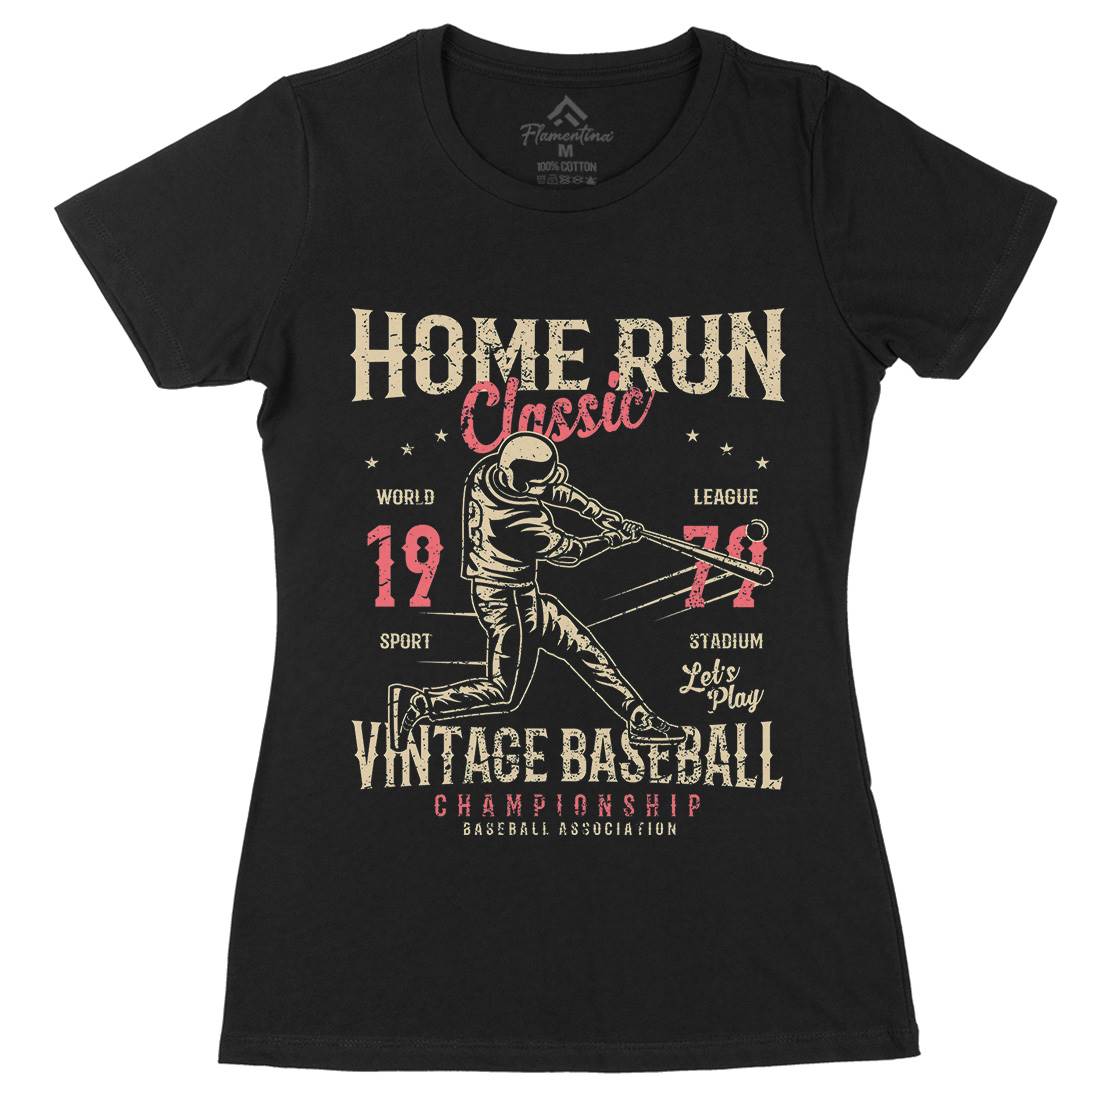 Home Run Classic Womens Organic Crew Neck T-Shirt Sport A065